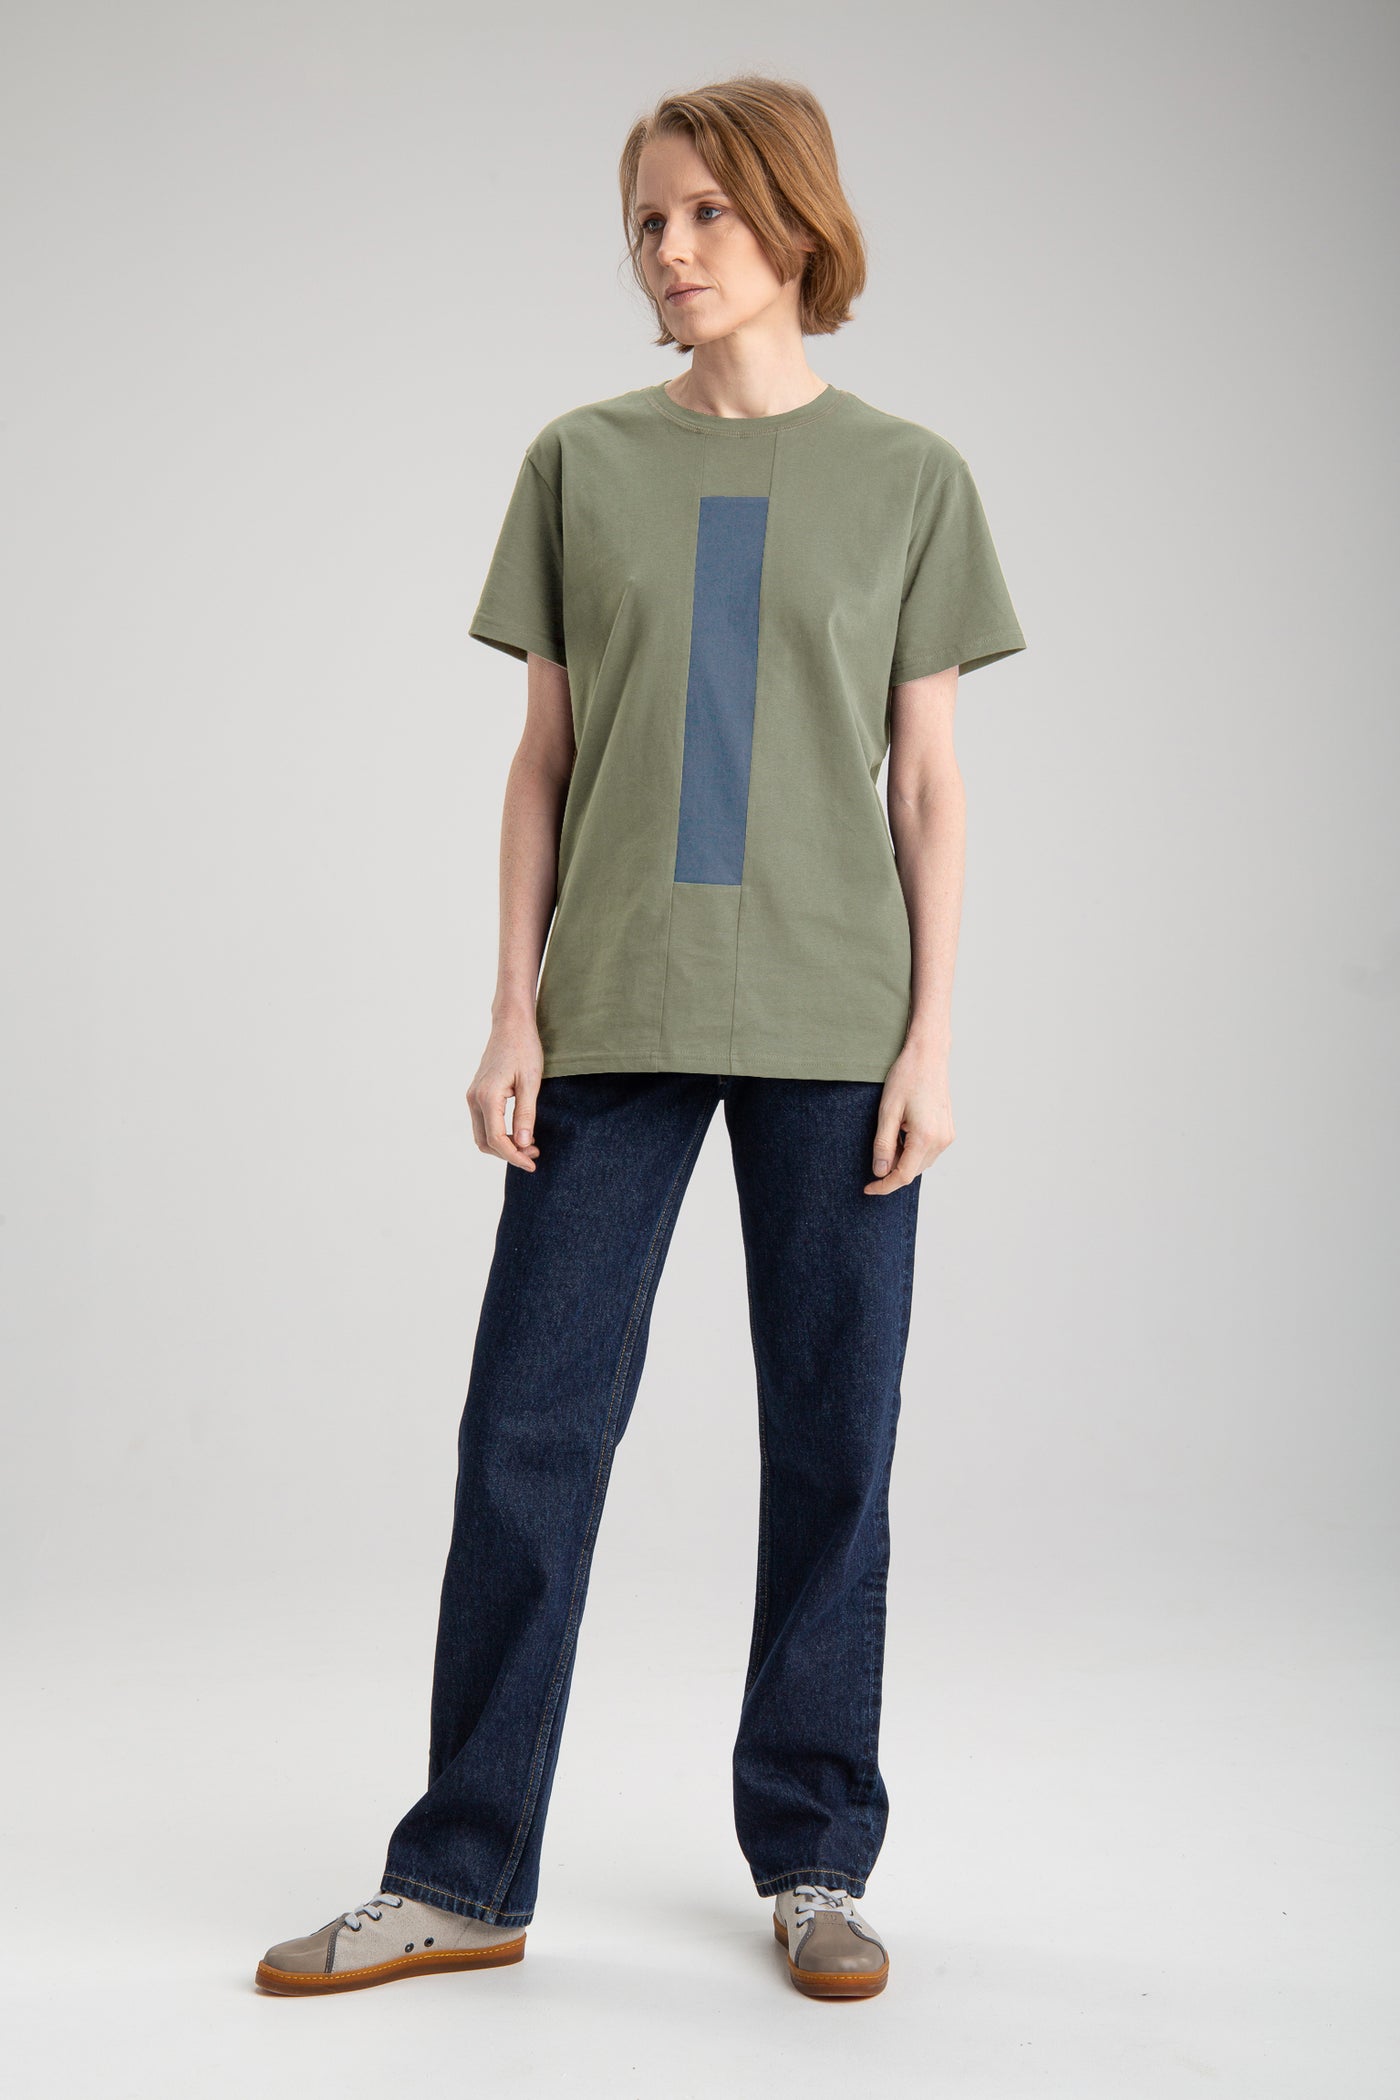 Up-shirt for women - I motif | Green, Blue